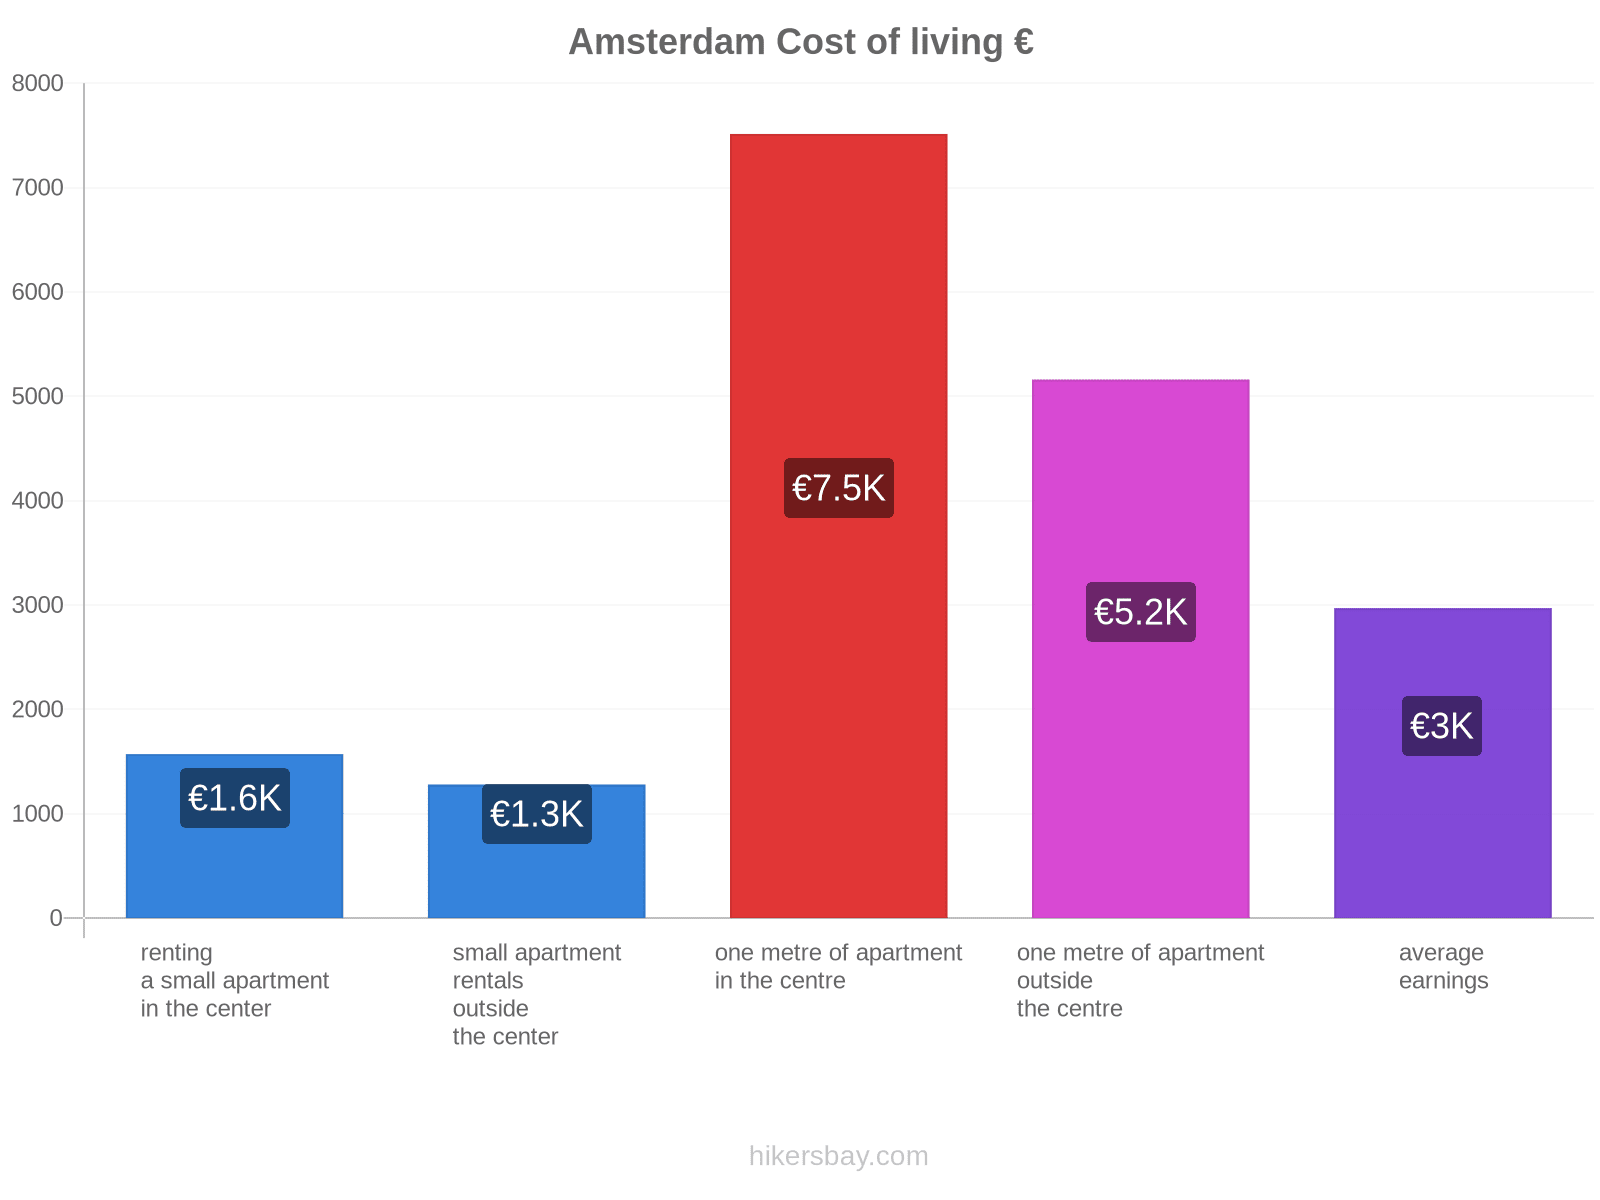 Amsterdam cost of living hikersbay.com